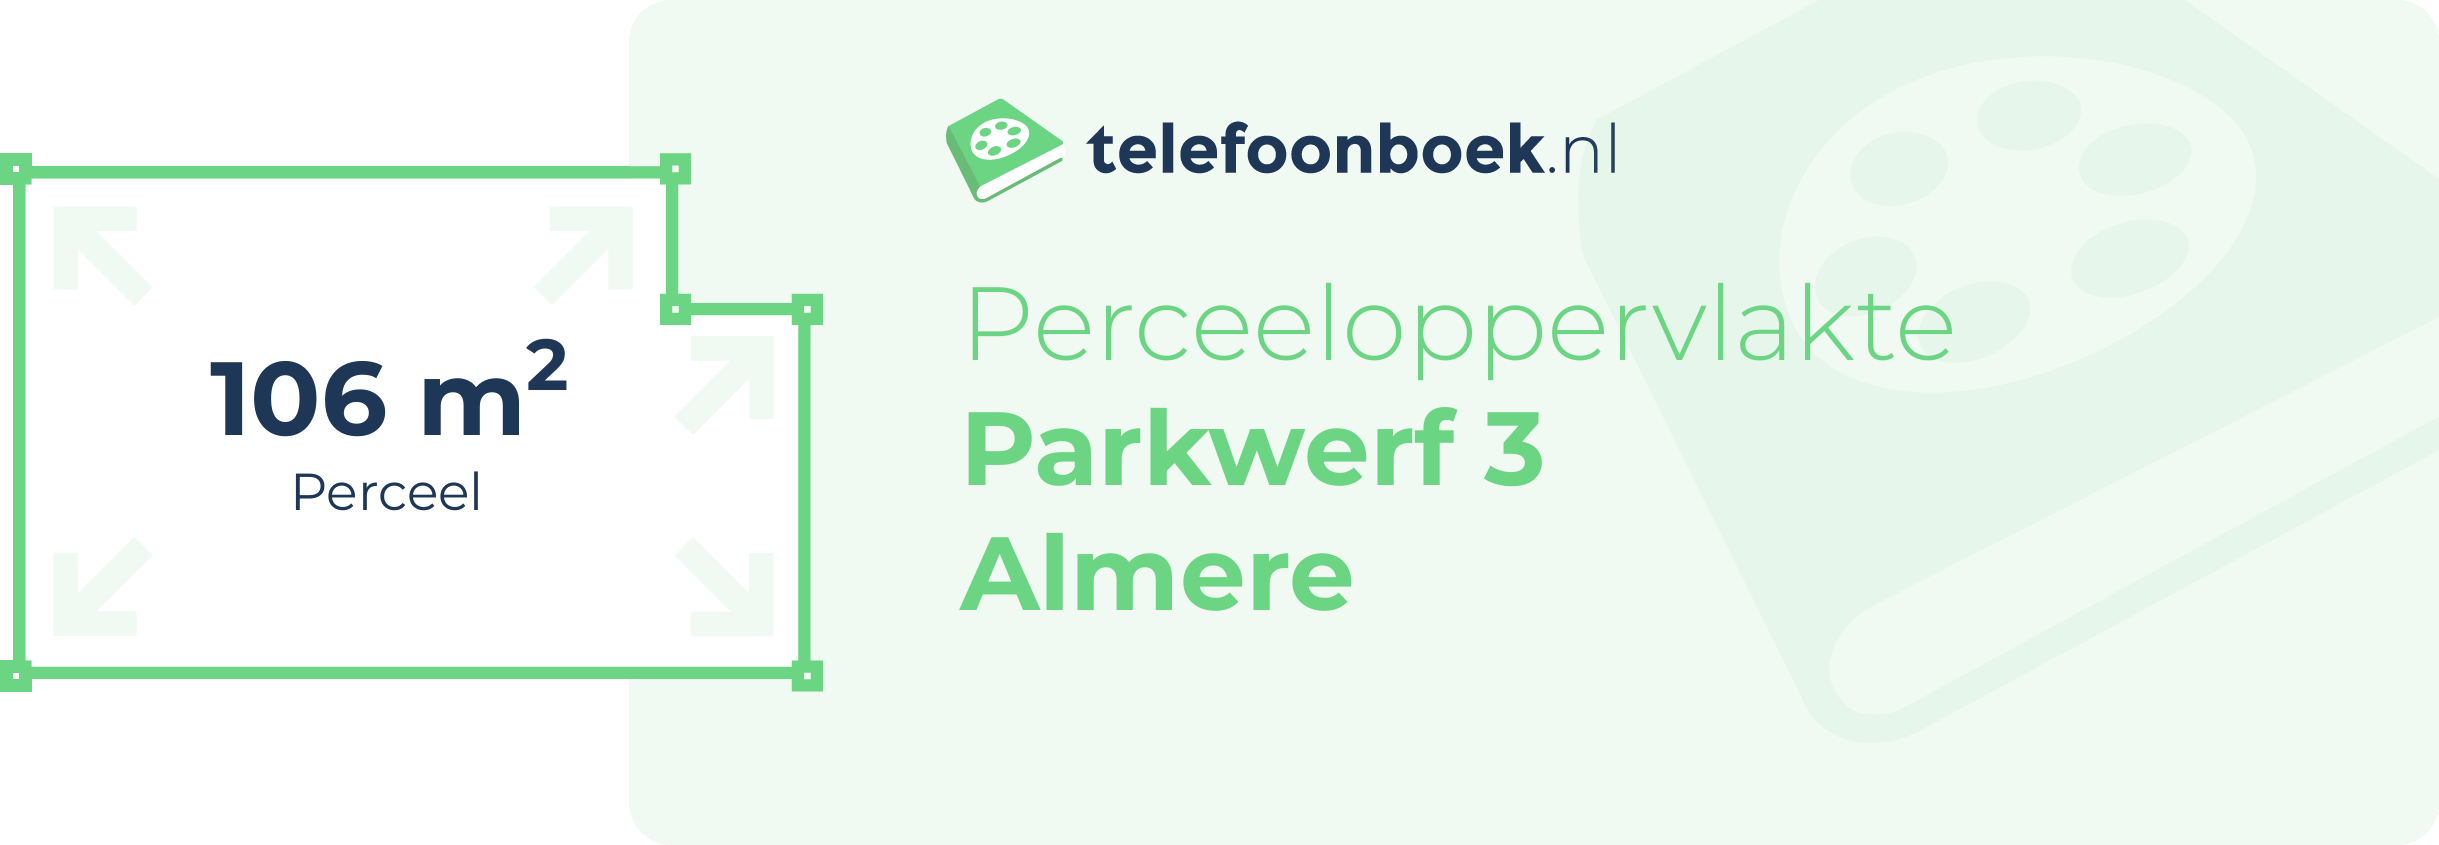 Perceeloppervlakte Parkwerf 3 Almere